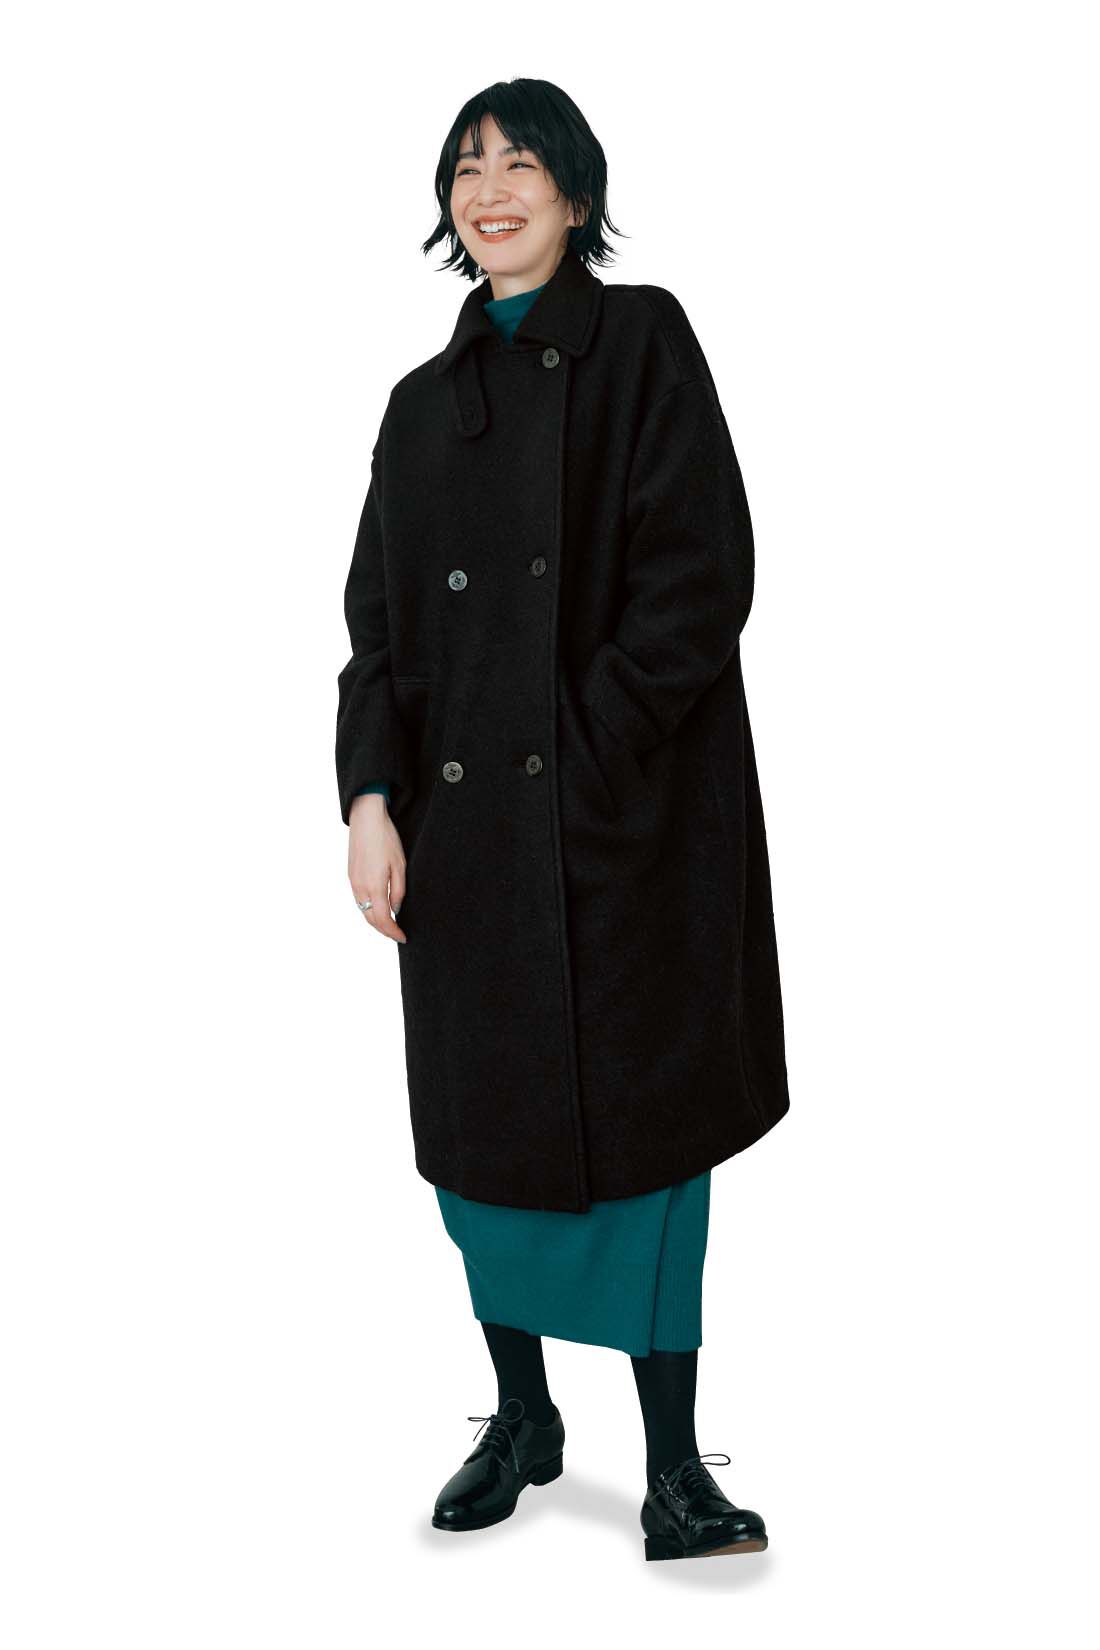 DRECO by IEDIT|IEDIT[イディット]　スライバーニット素材で軽くて暖か ゆるっと着こなす新鮮ロング丈Pコート〈ブラック〉